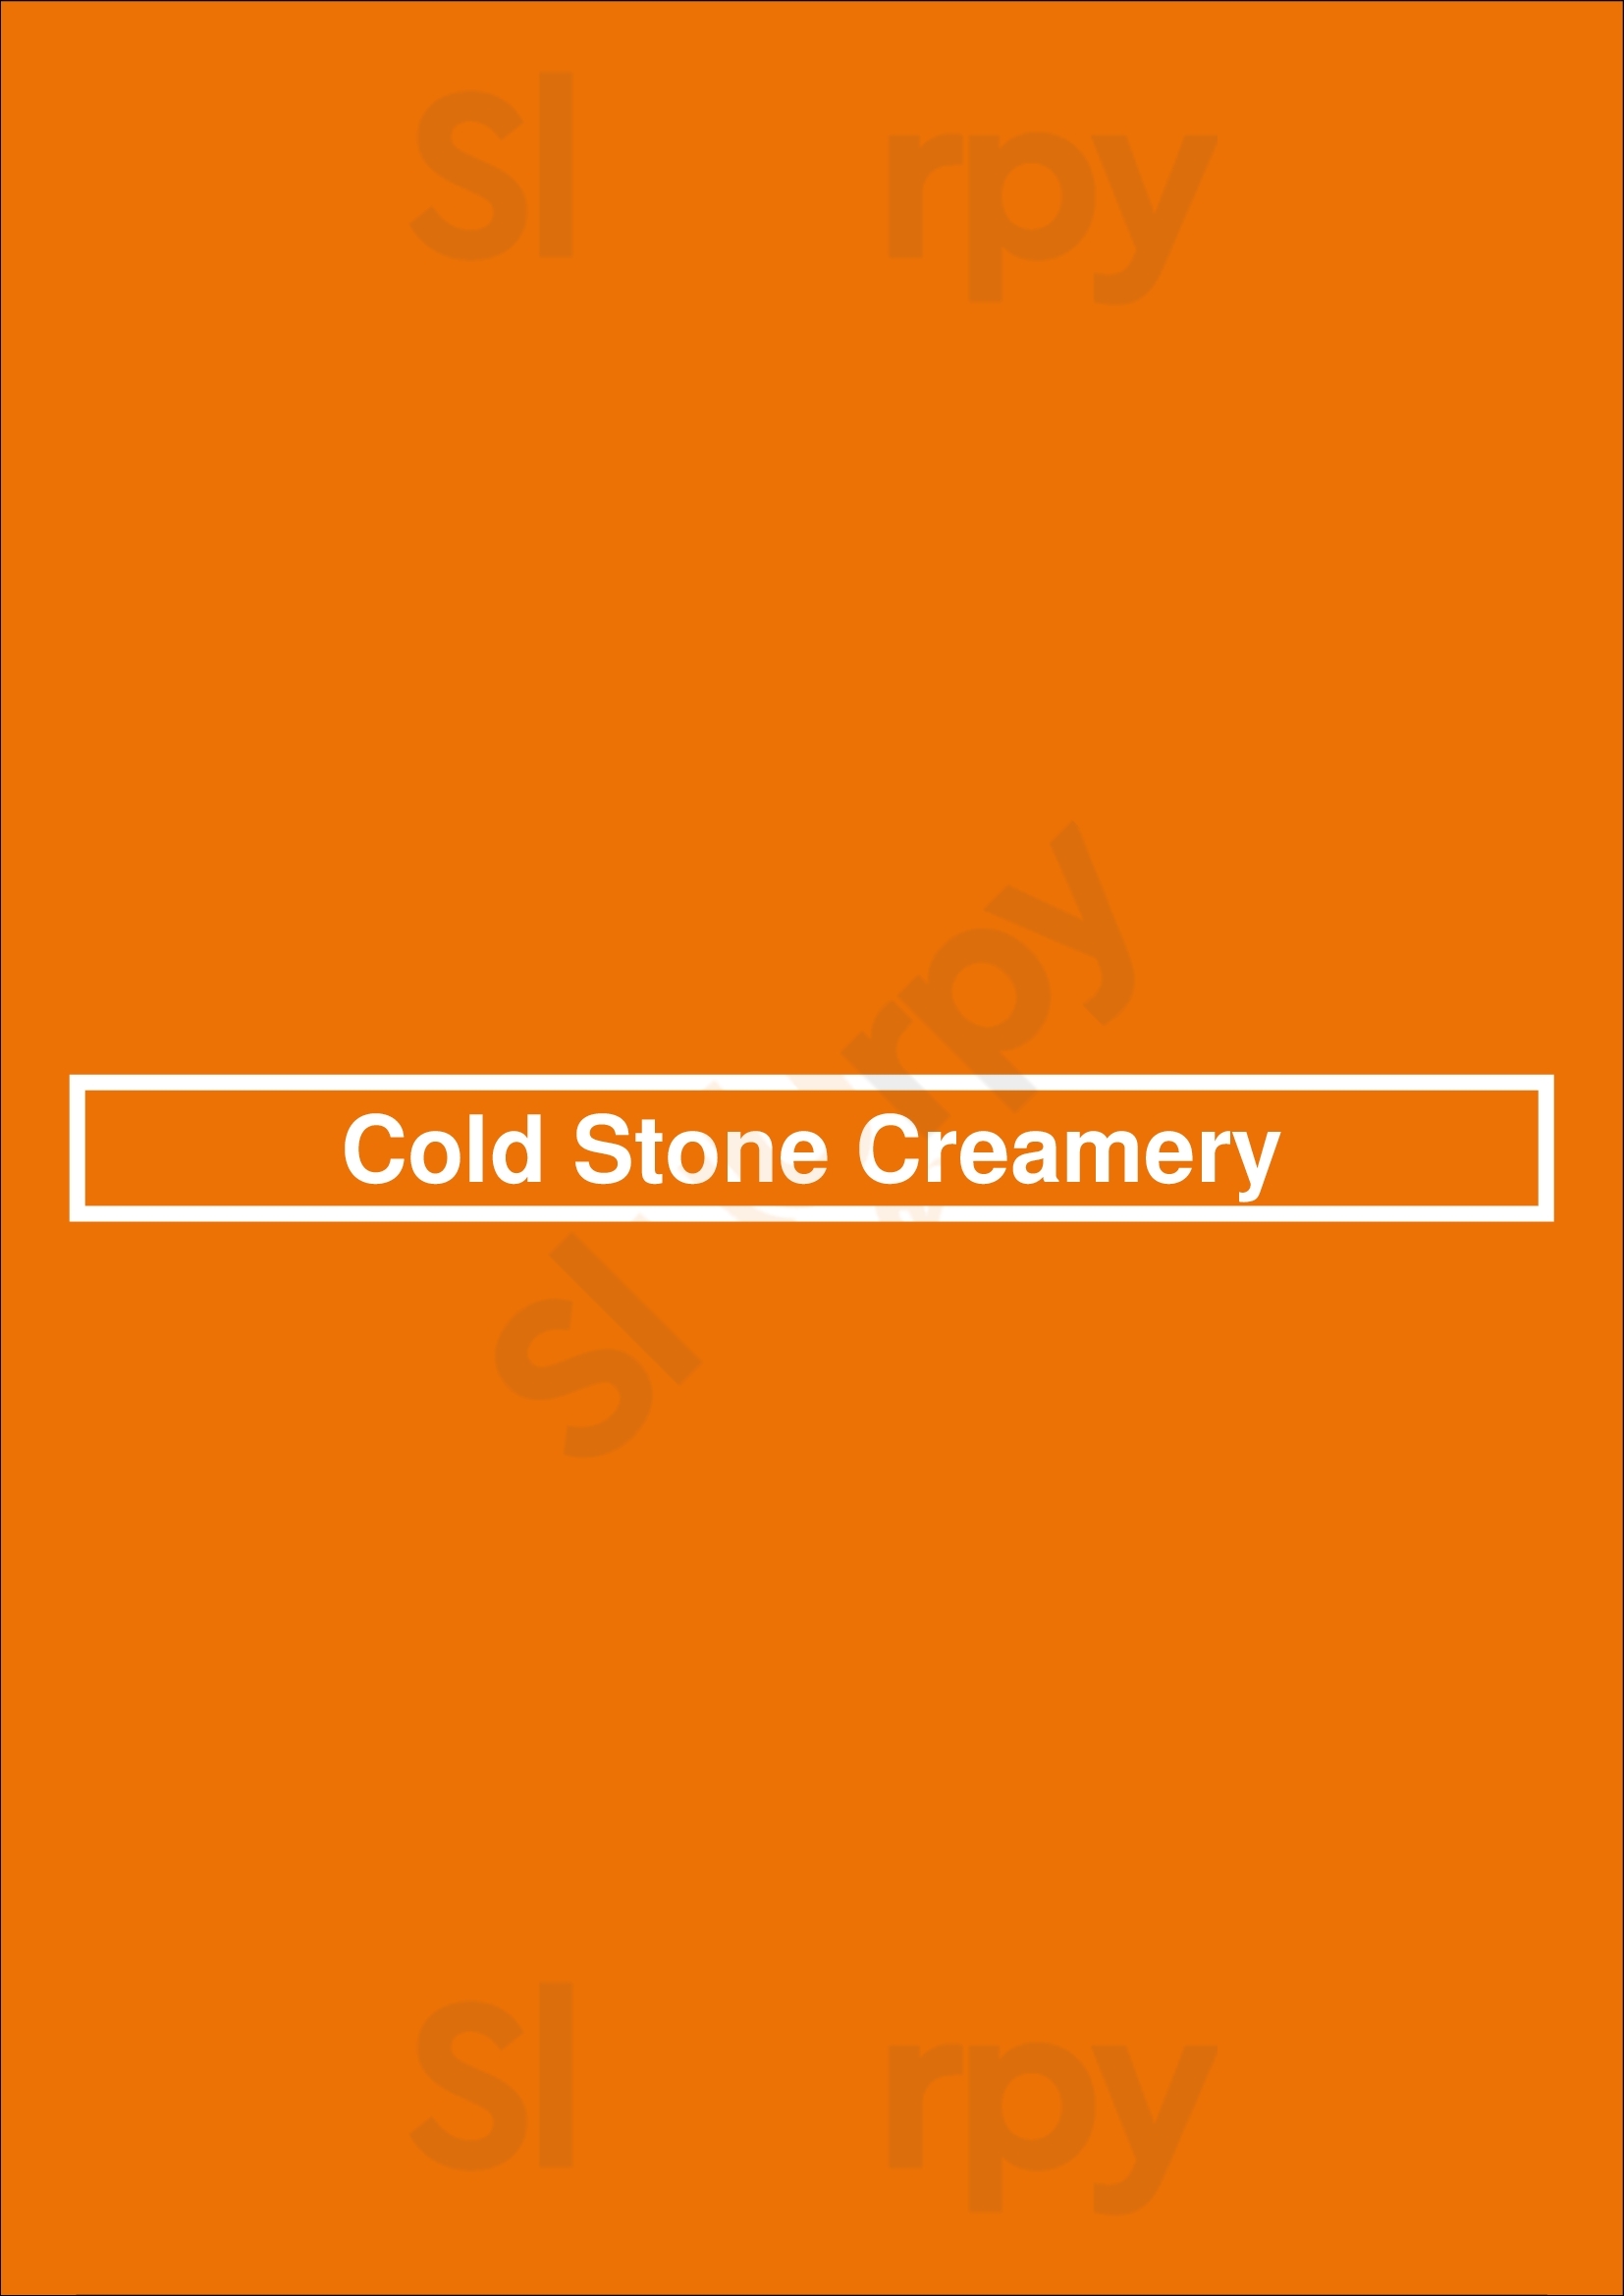 Cold Stone Creamery Astoria Menu - 1